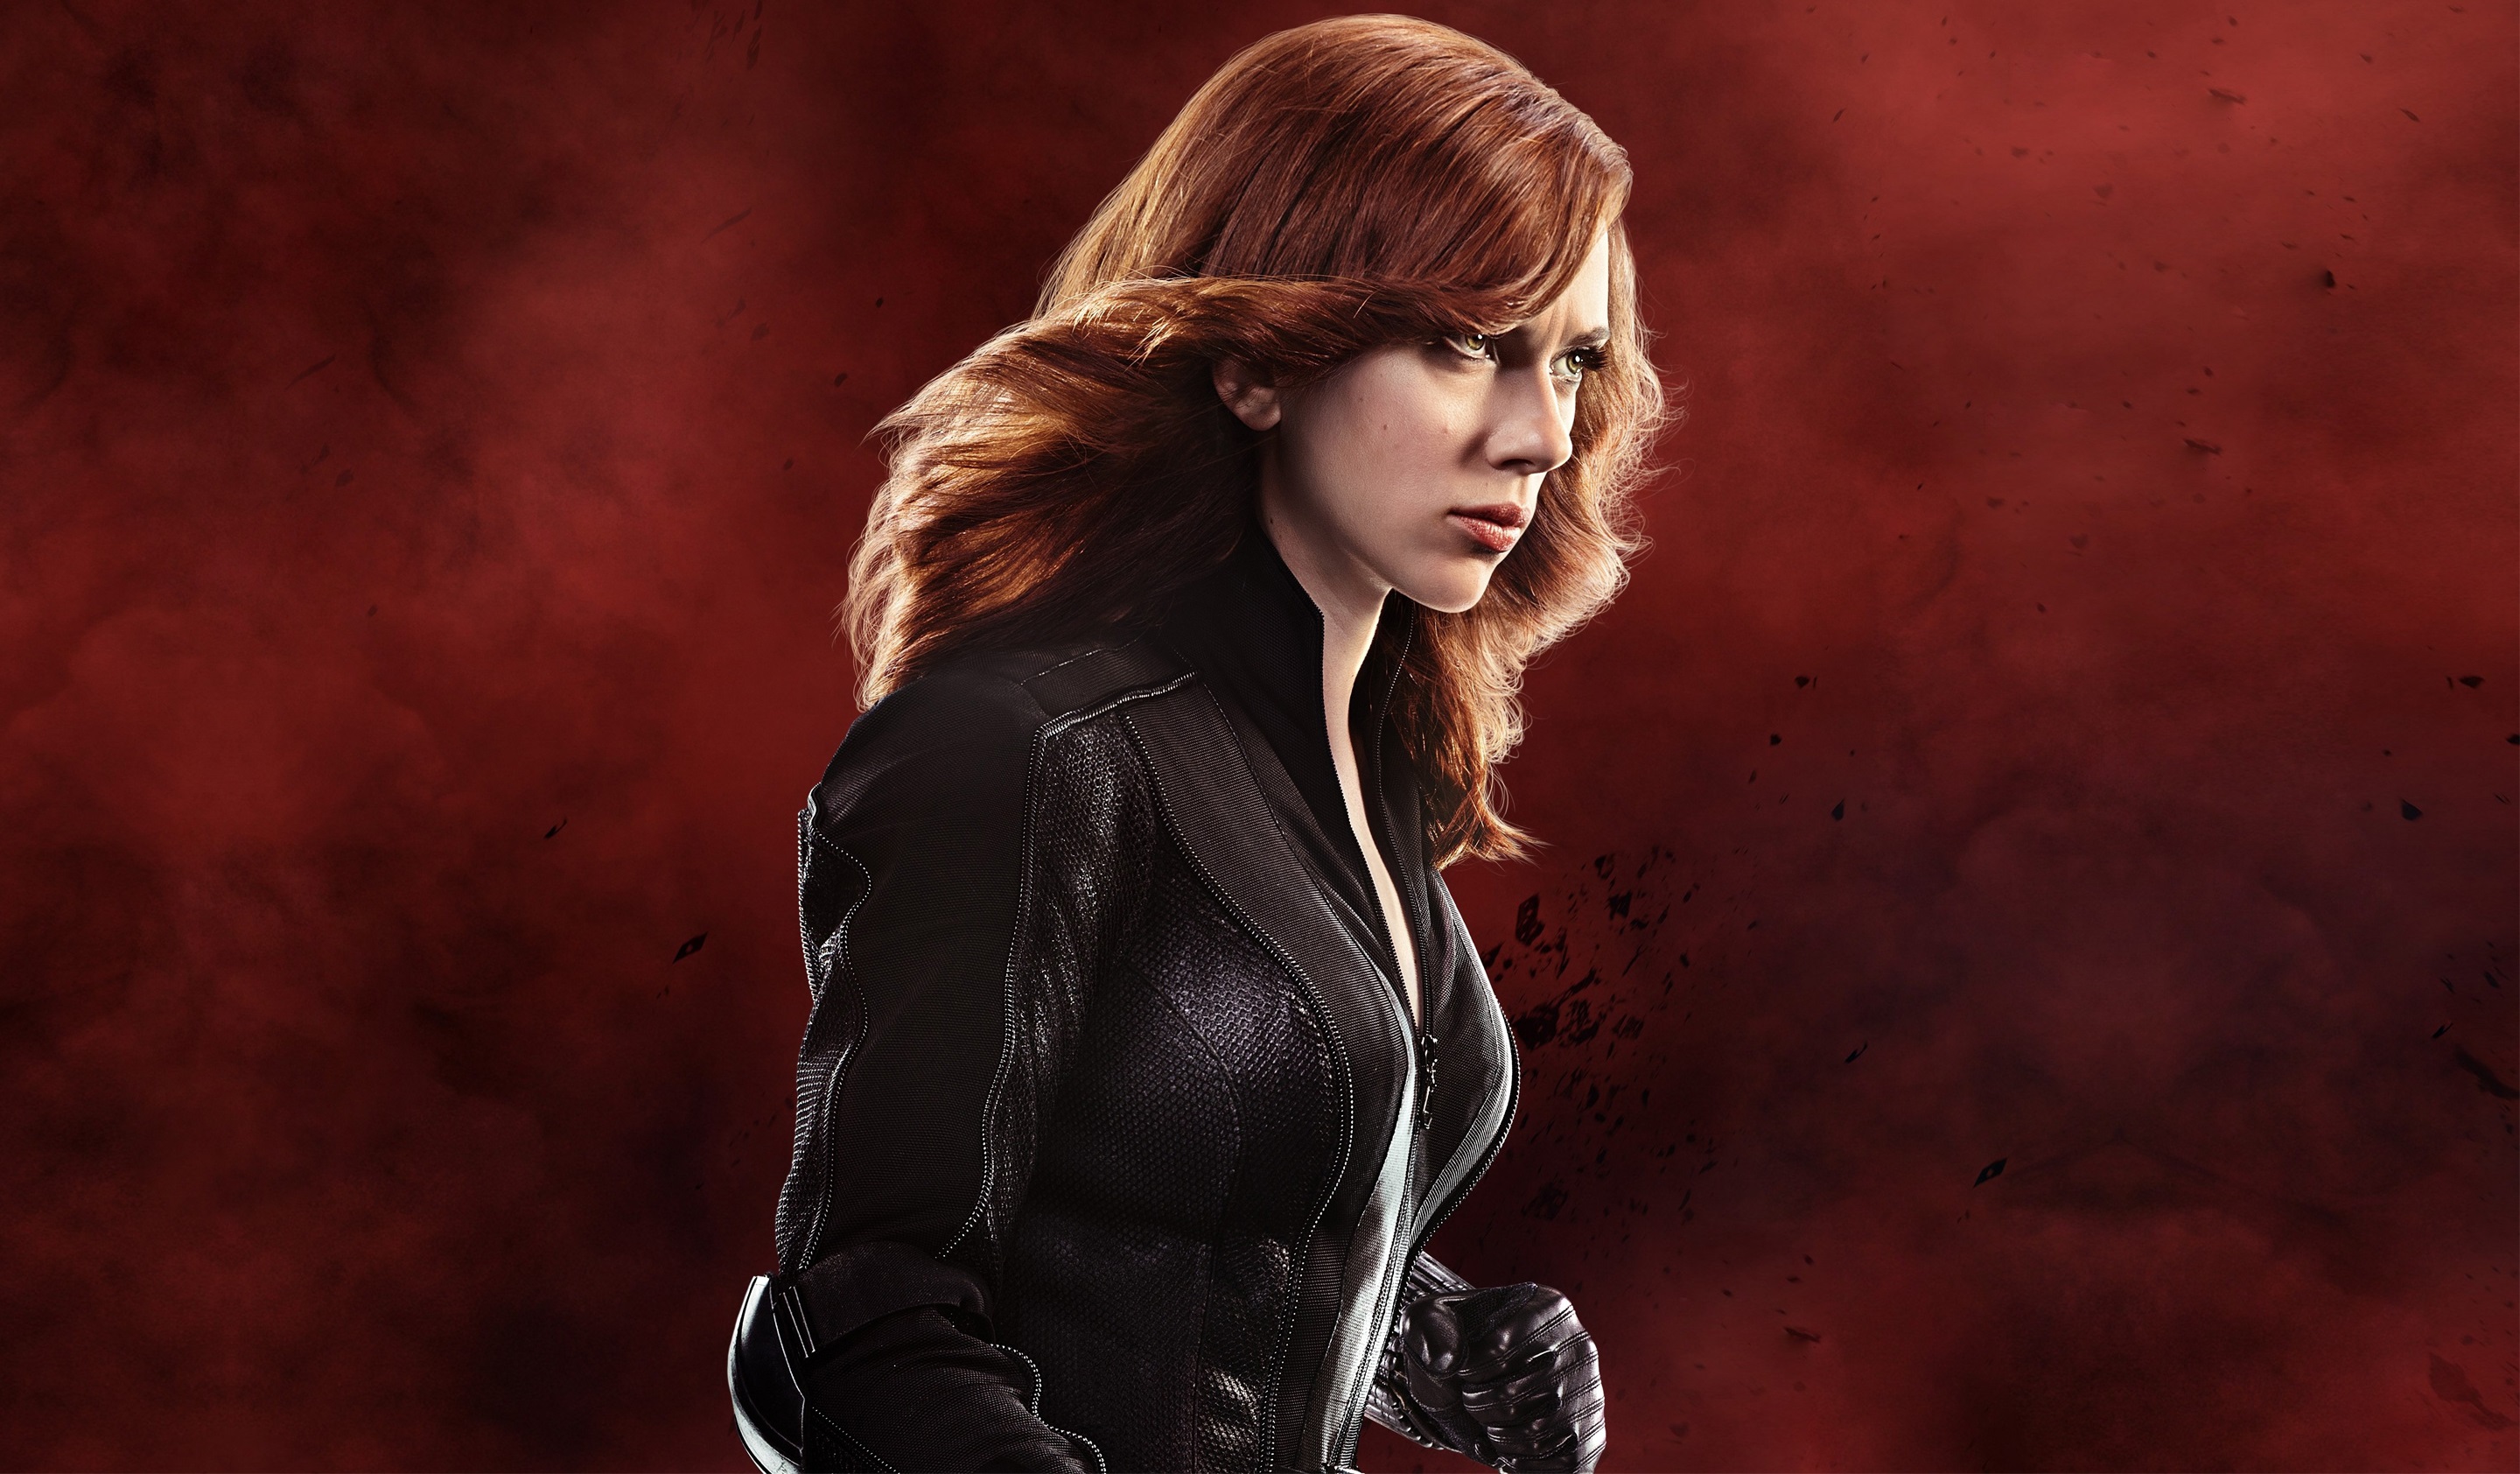 Captain America Civil War Image Black Widow HD Wallpaper And